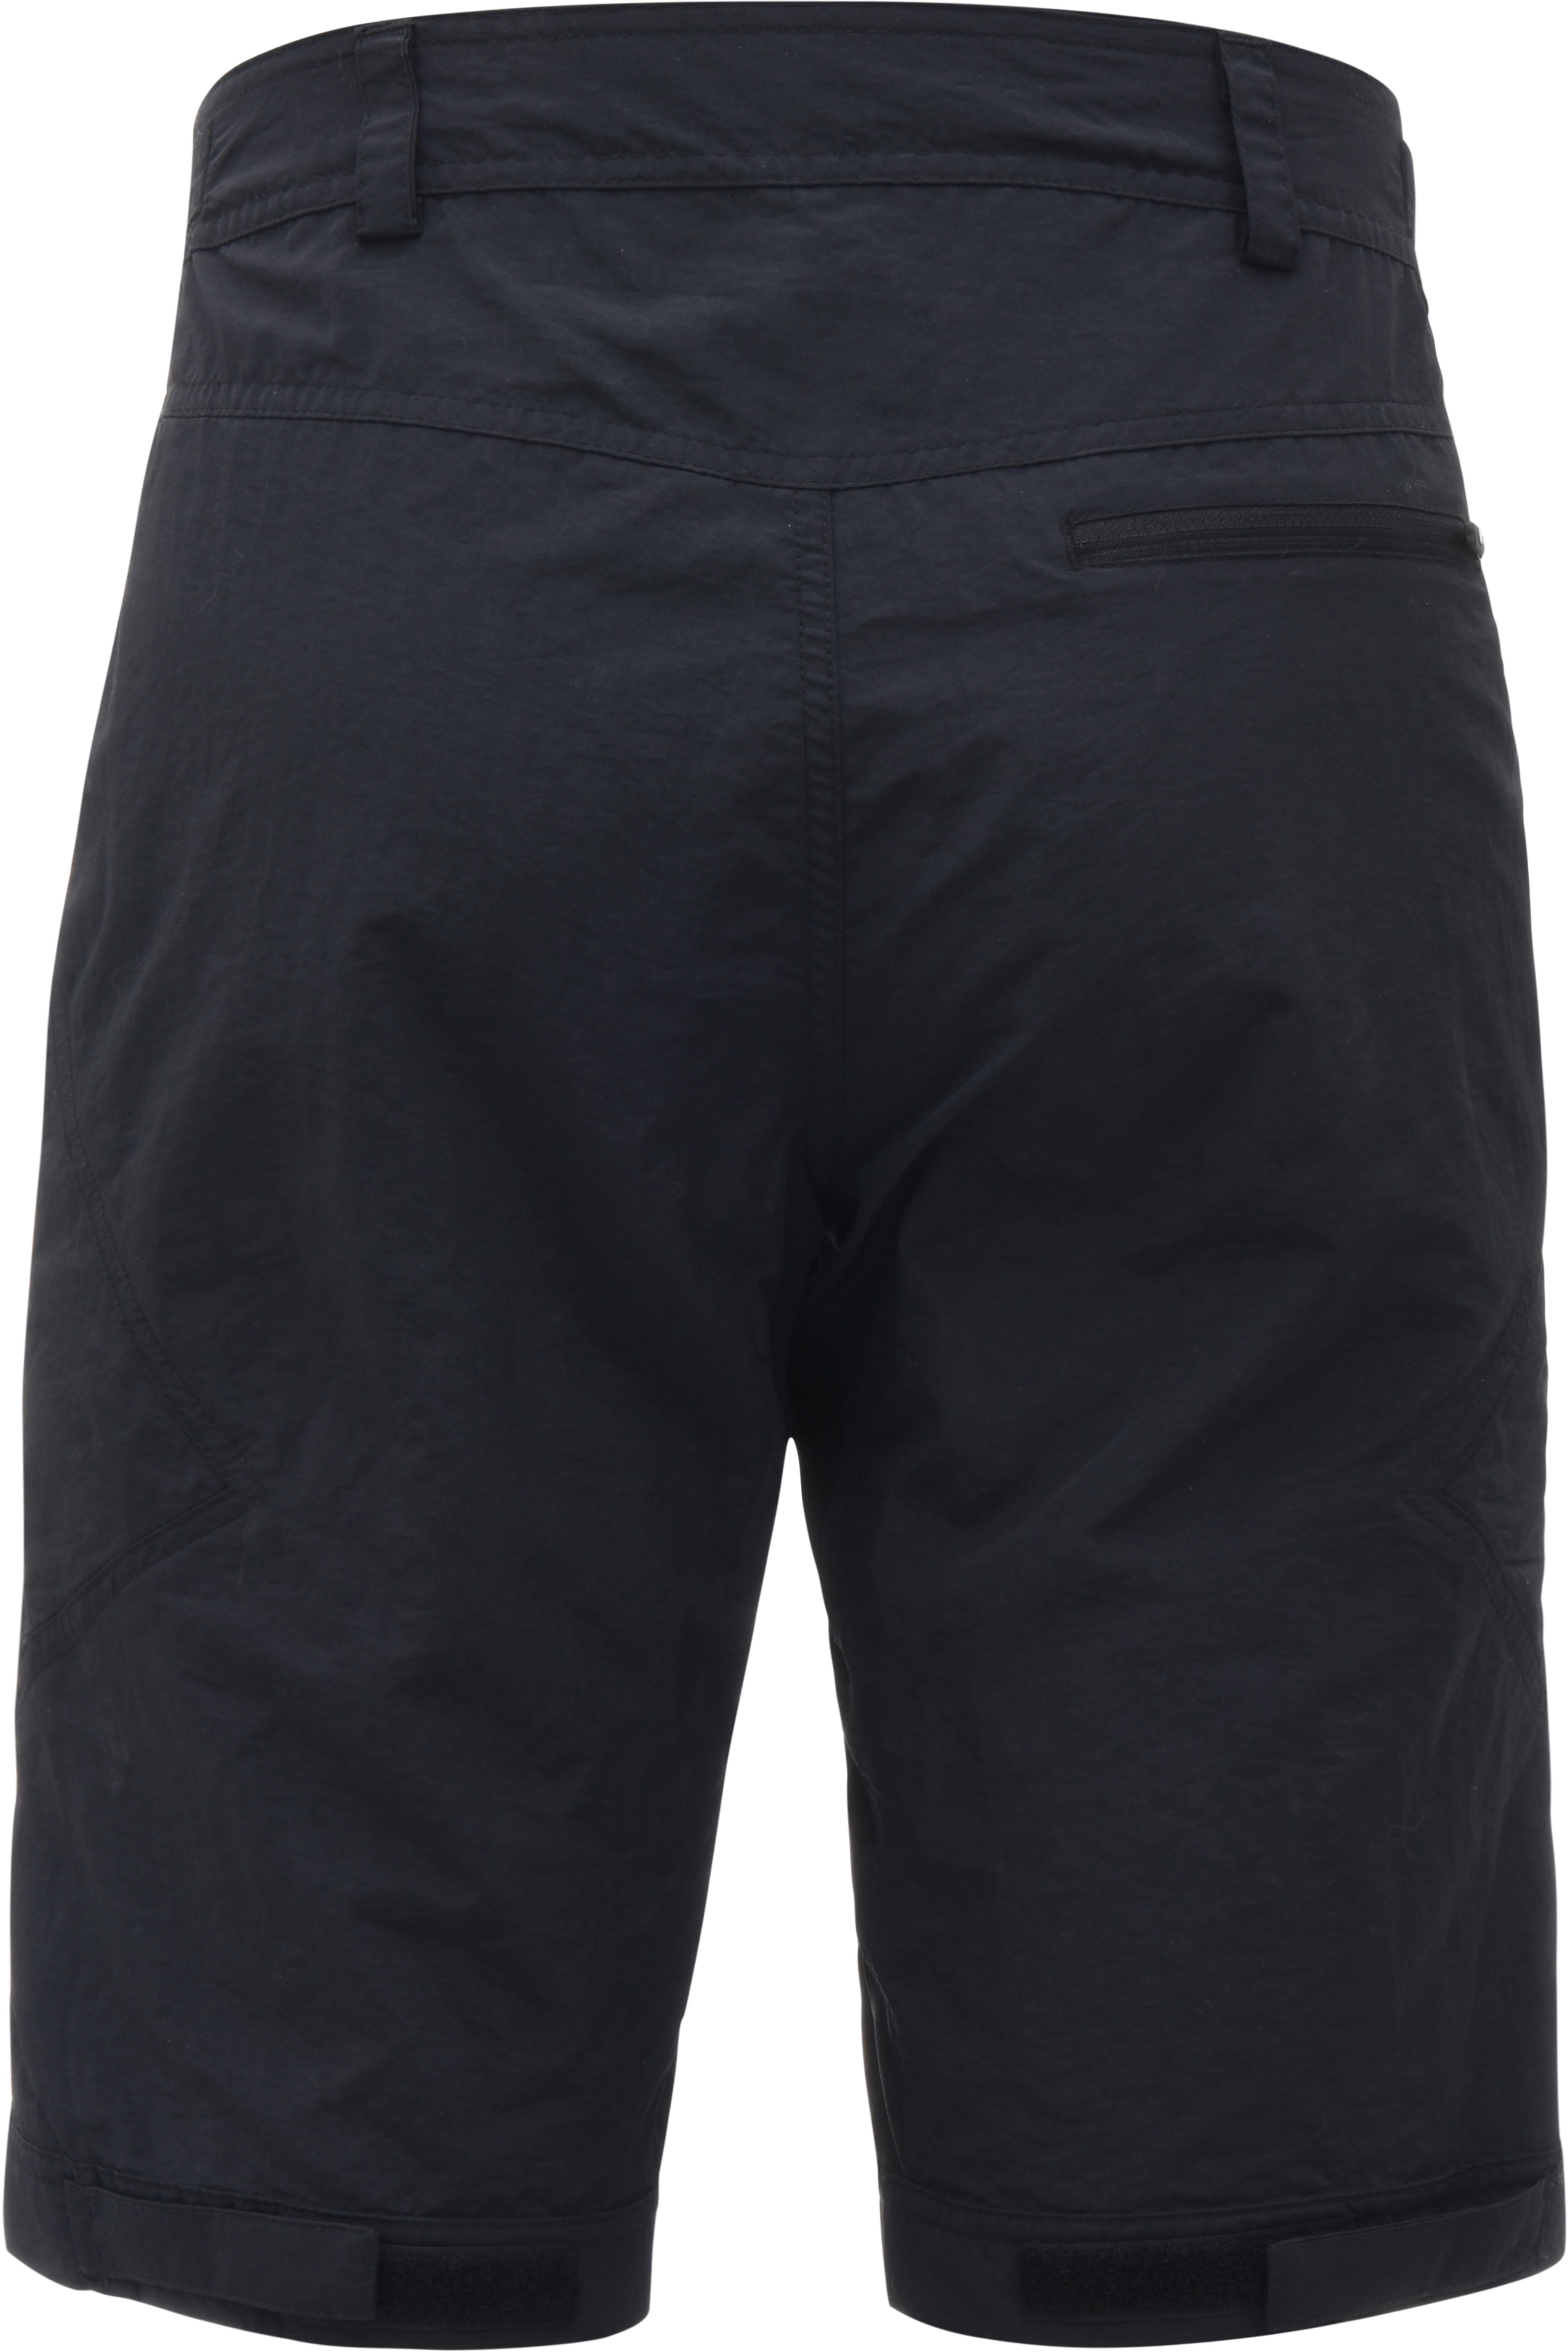 boardman casual cycle shorts